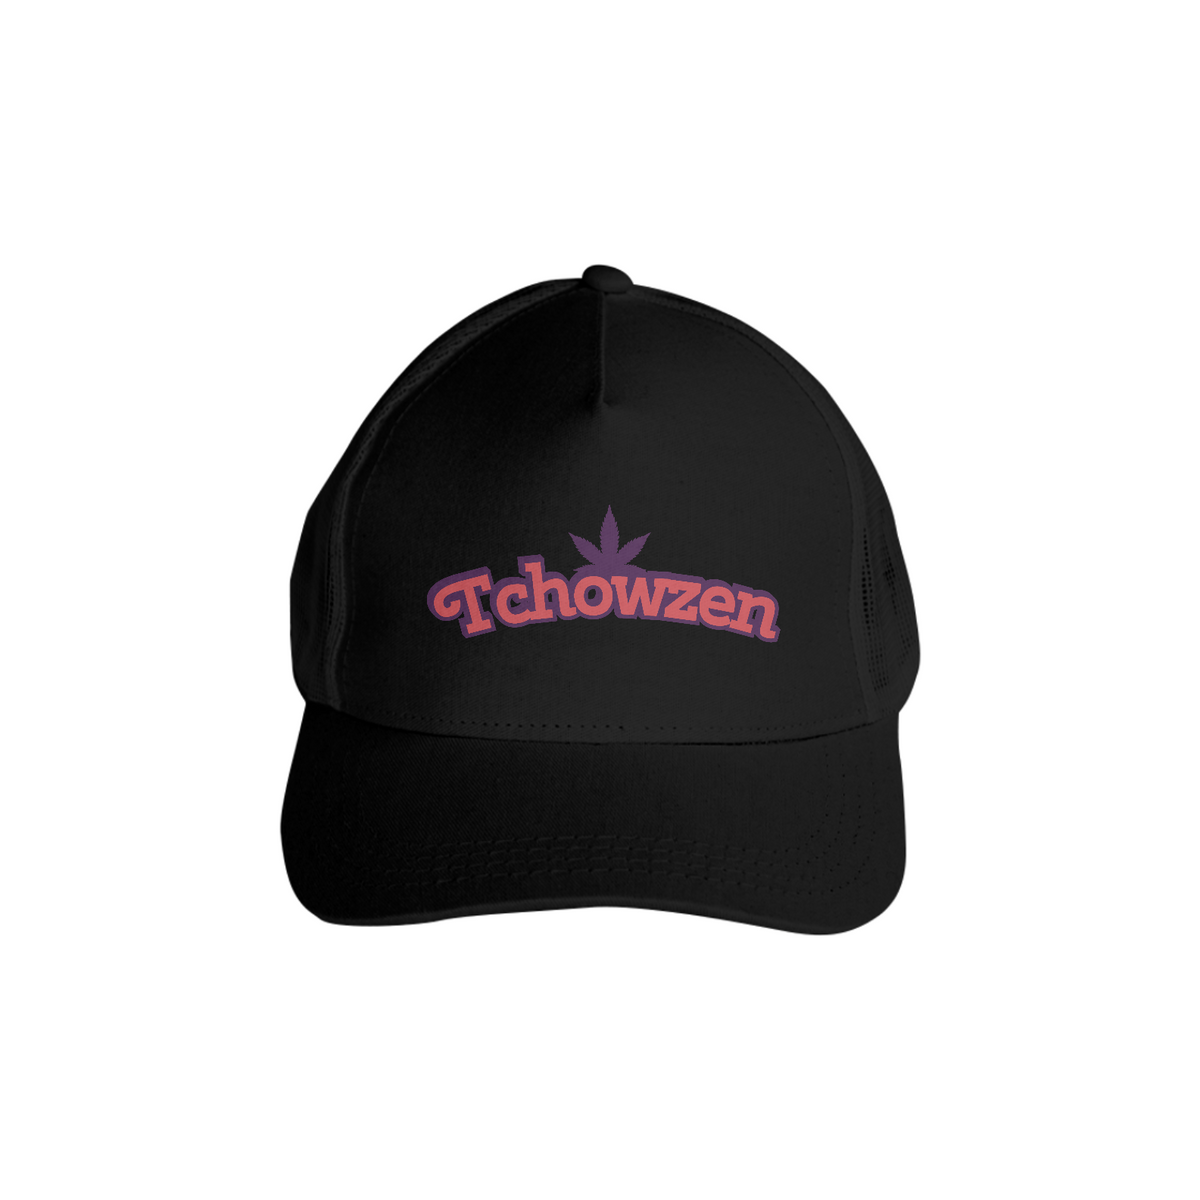 Nome do produto: Tchowzen